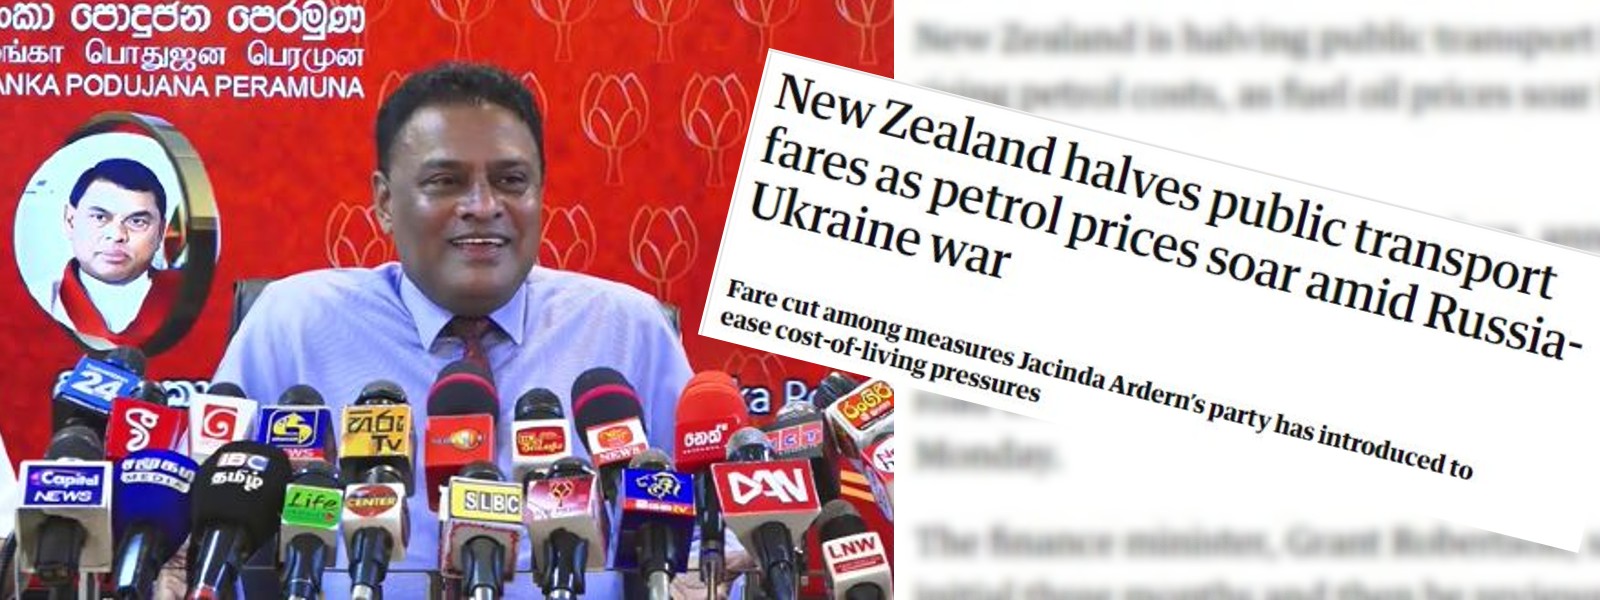 New Zealand also in fuel crisis, says SLPP MP; Kiwi Govt slashes fuel taxes